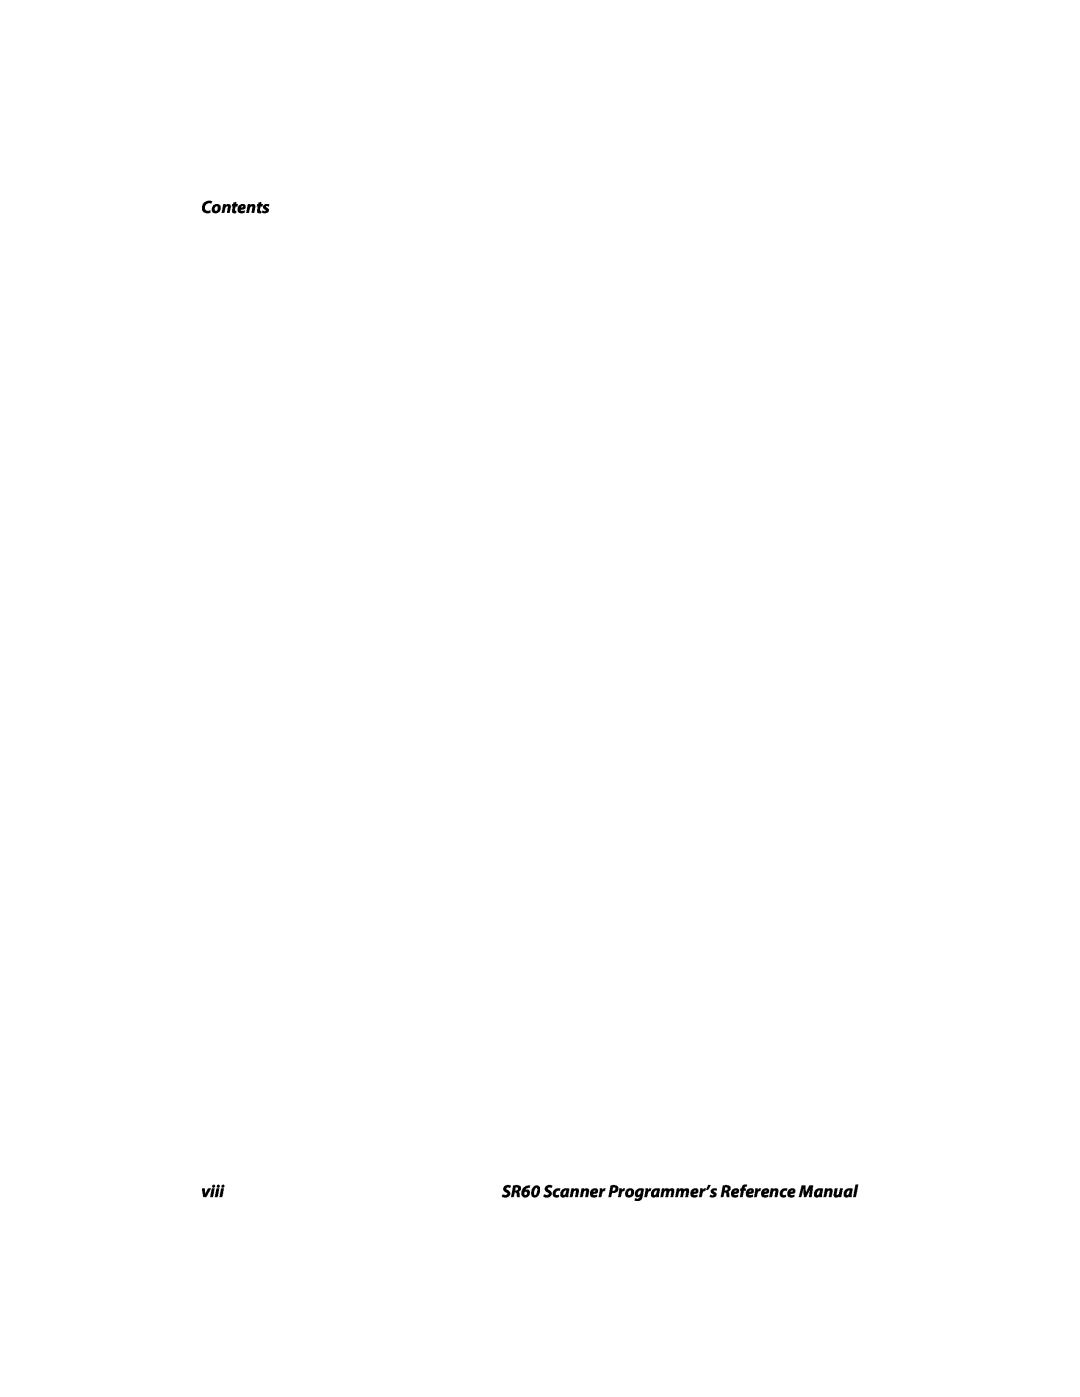 Intermec manual Contents, viii, SR60 Scanner Programmer’s Reference Manual 